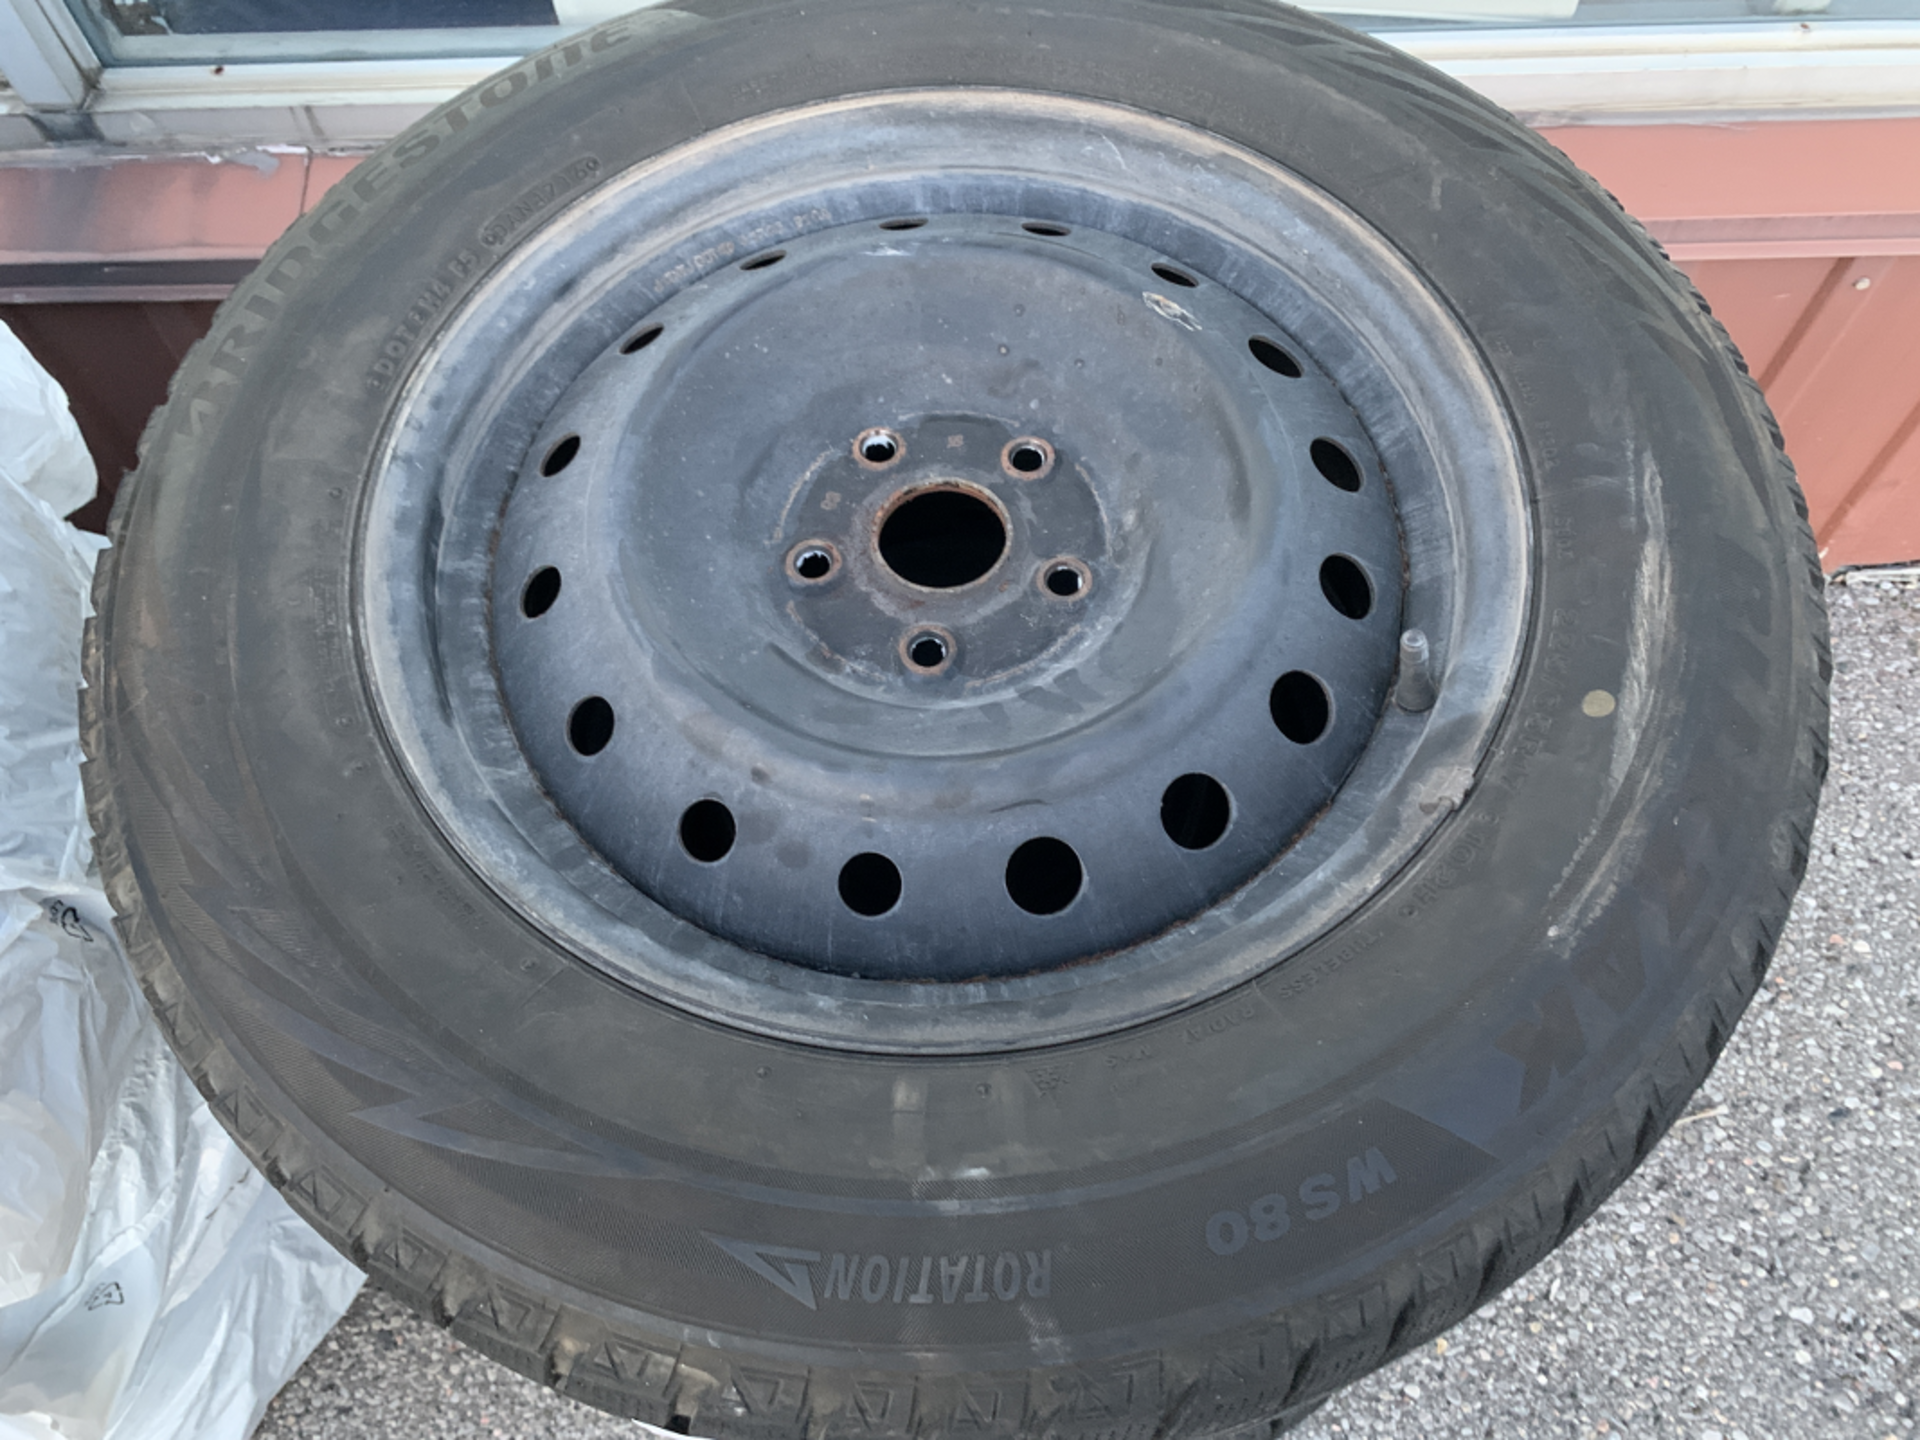 Bridgestone - Blizzak WS80 Winter Tires - Size: 225/65/R17 - Qty: 4 - Image 2 of 4